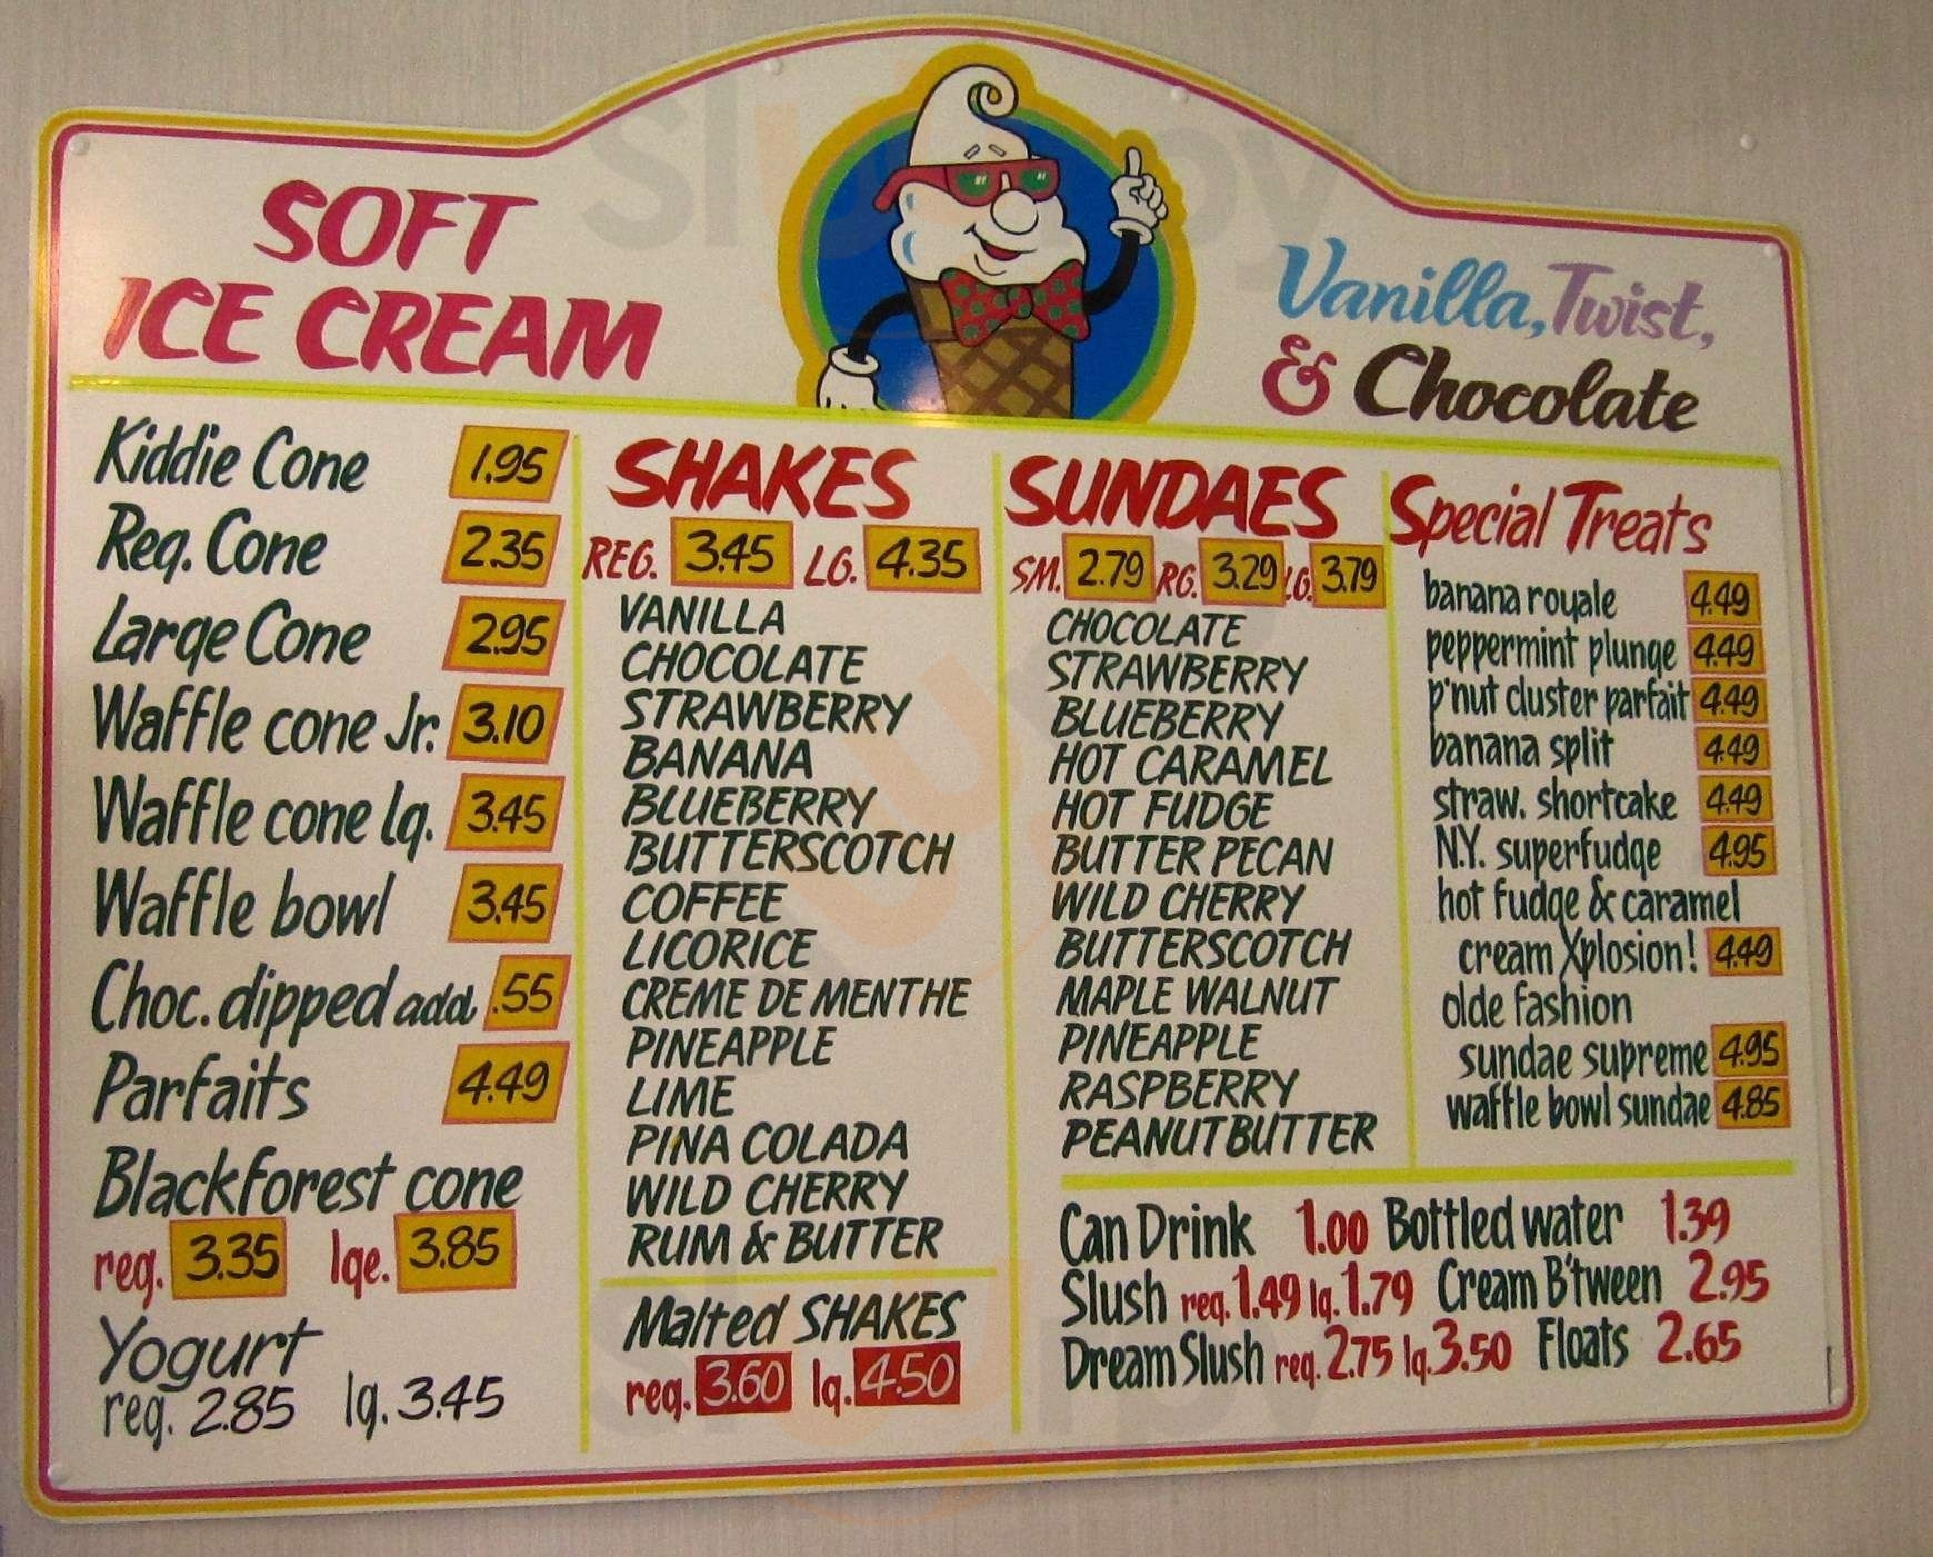 Sweet Tops Ice Cream Winnipeg Menu - 1